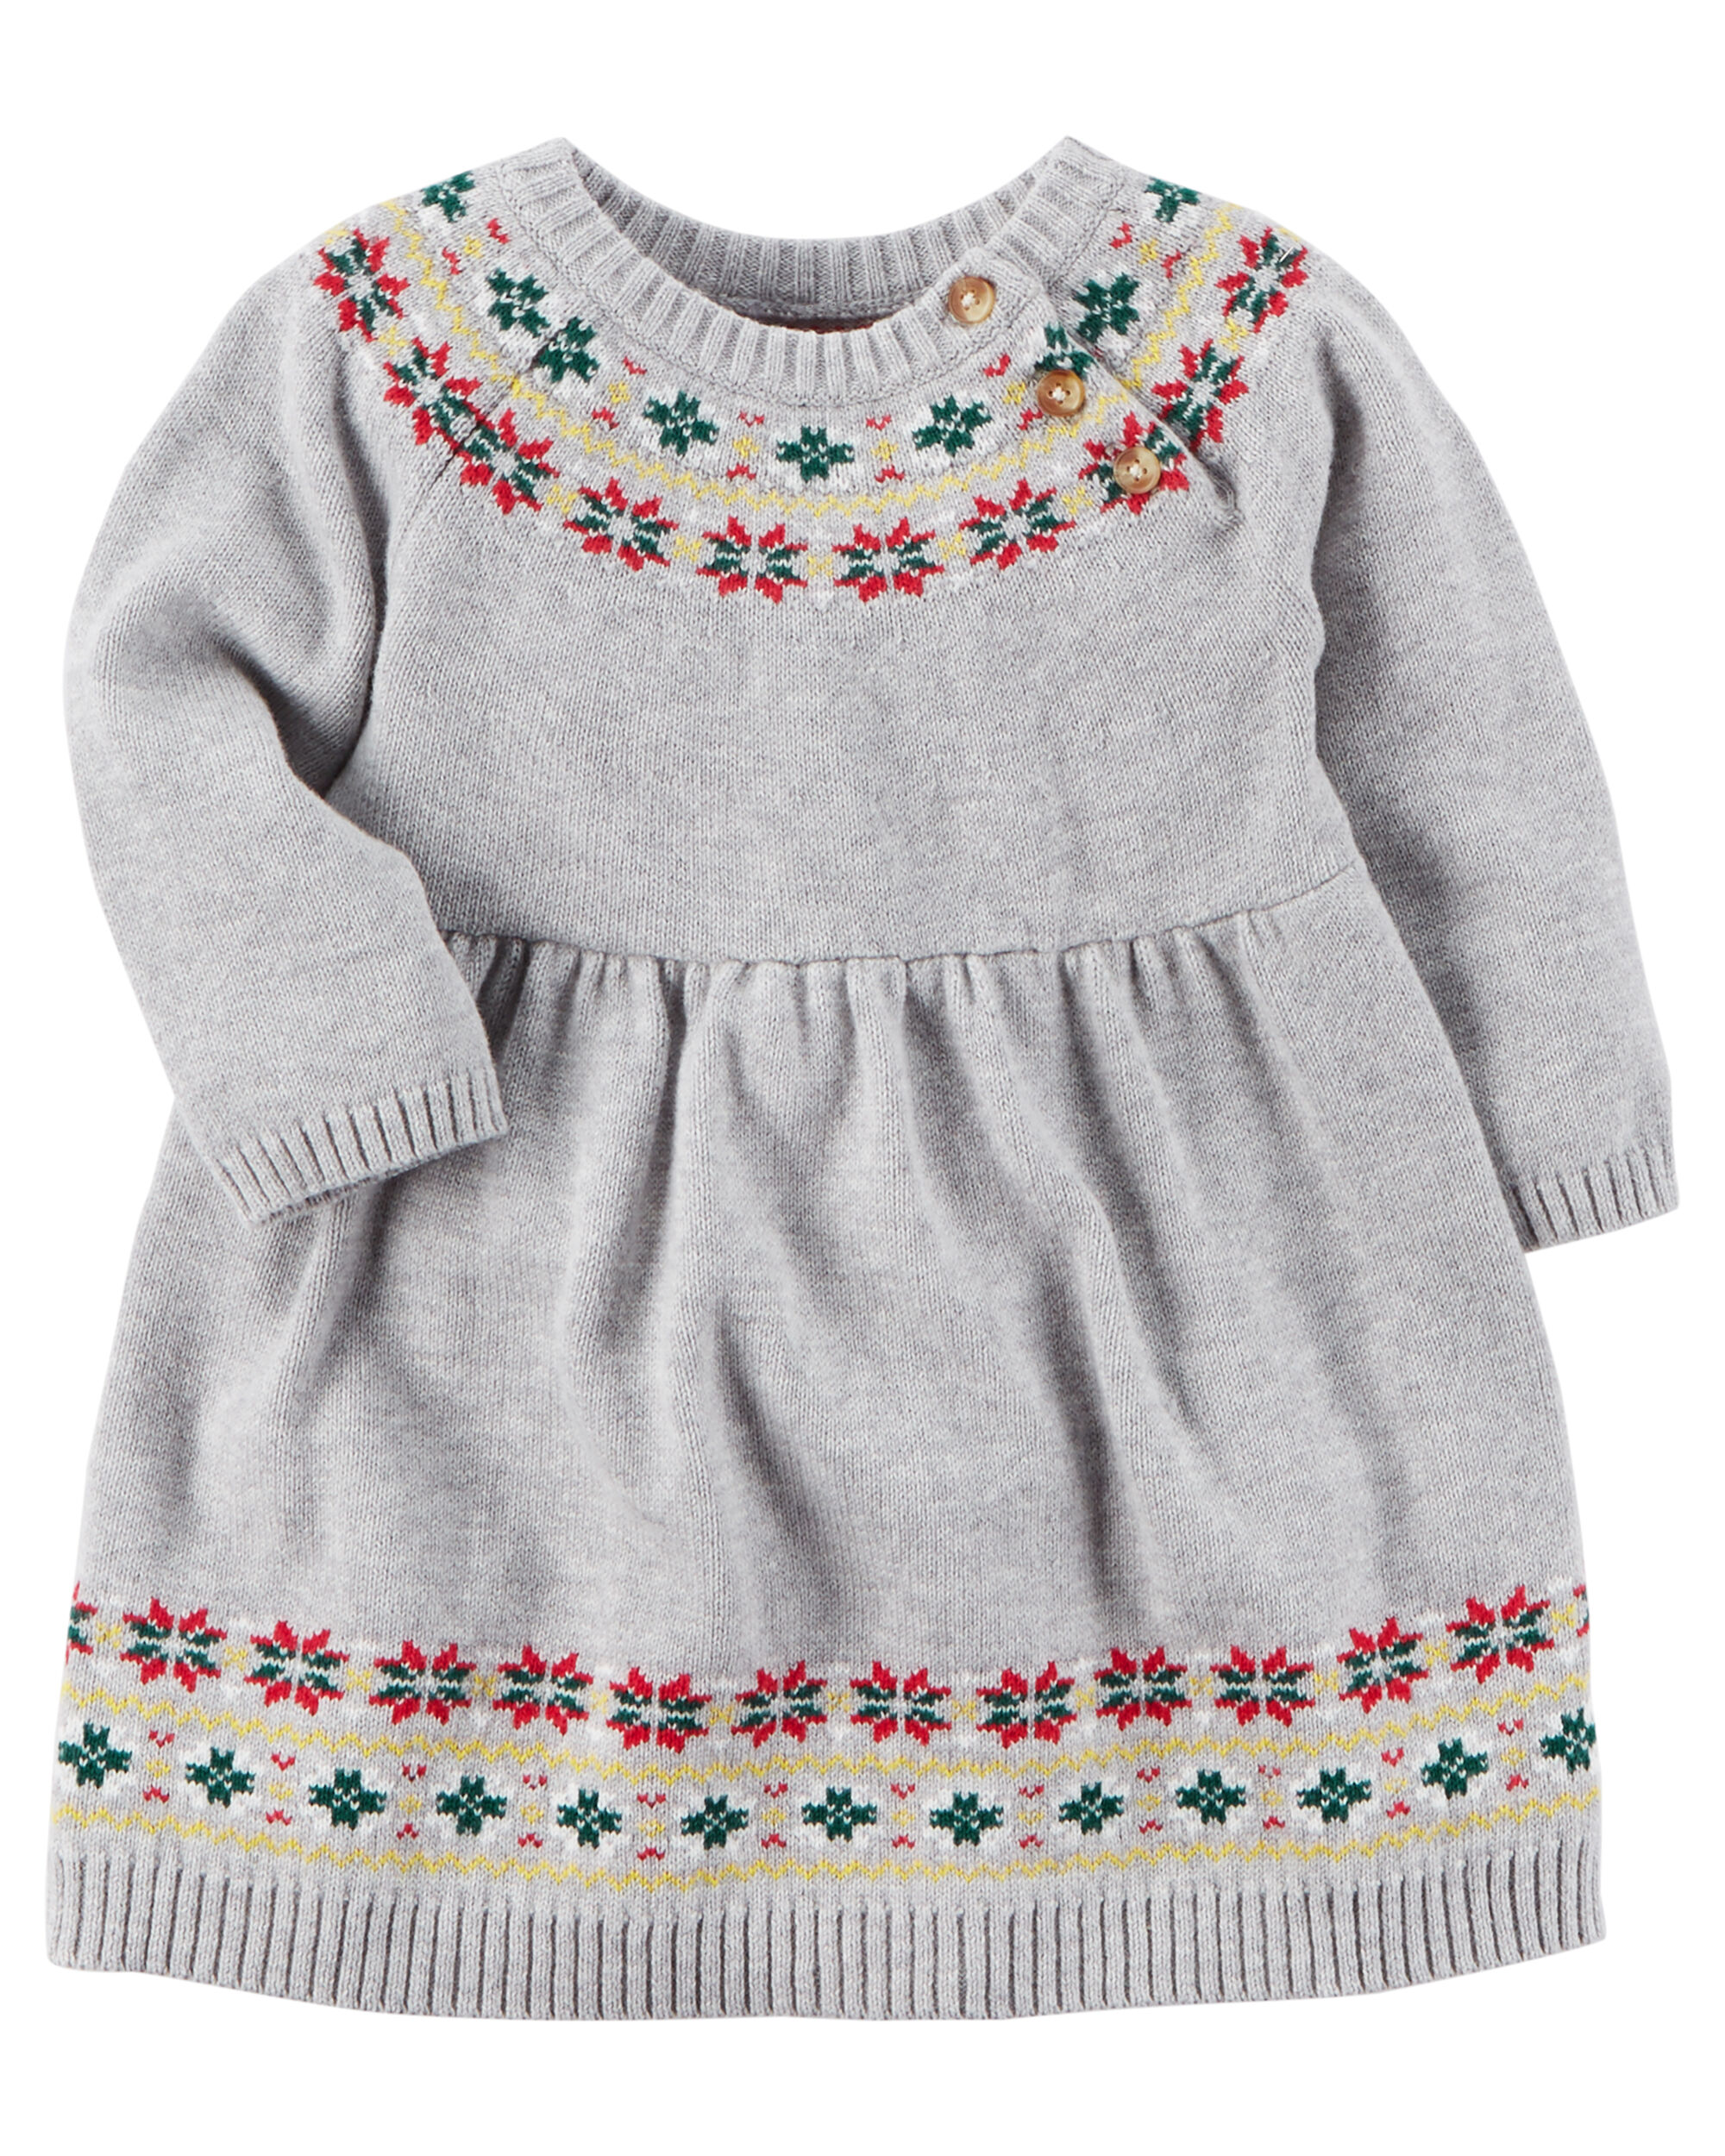 Fair Isle Sweater Dress | Carters.com